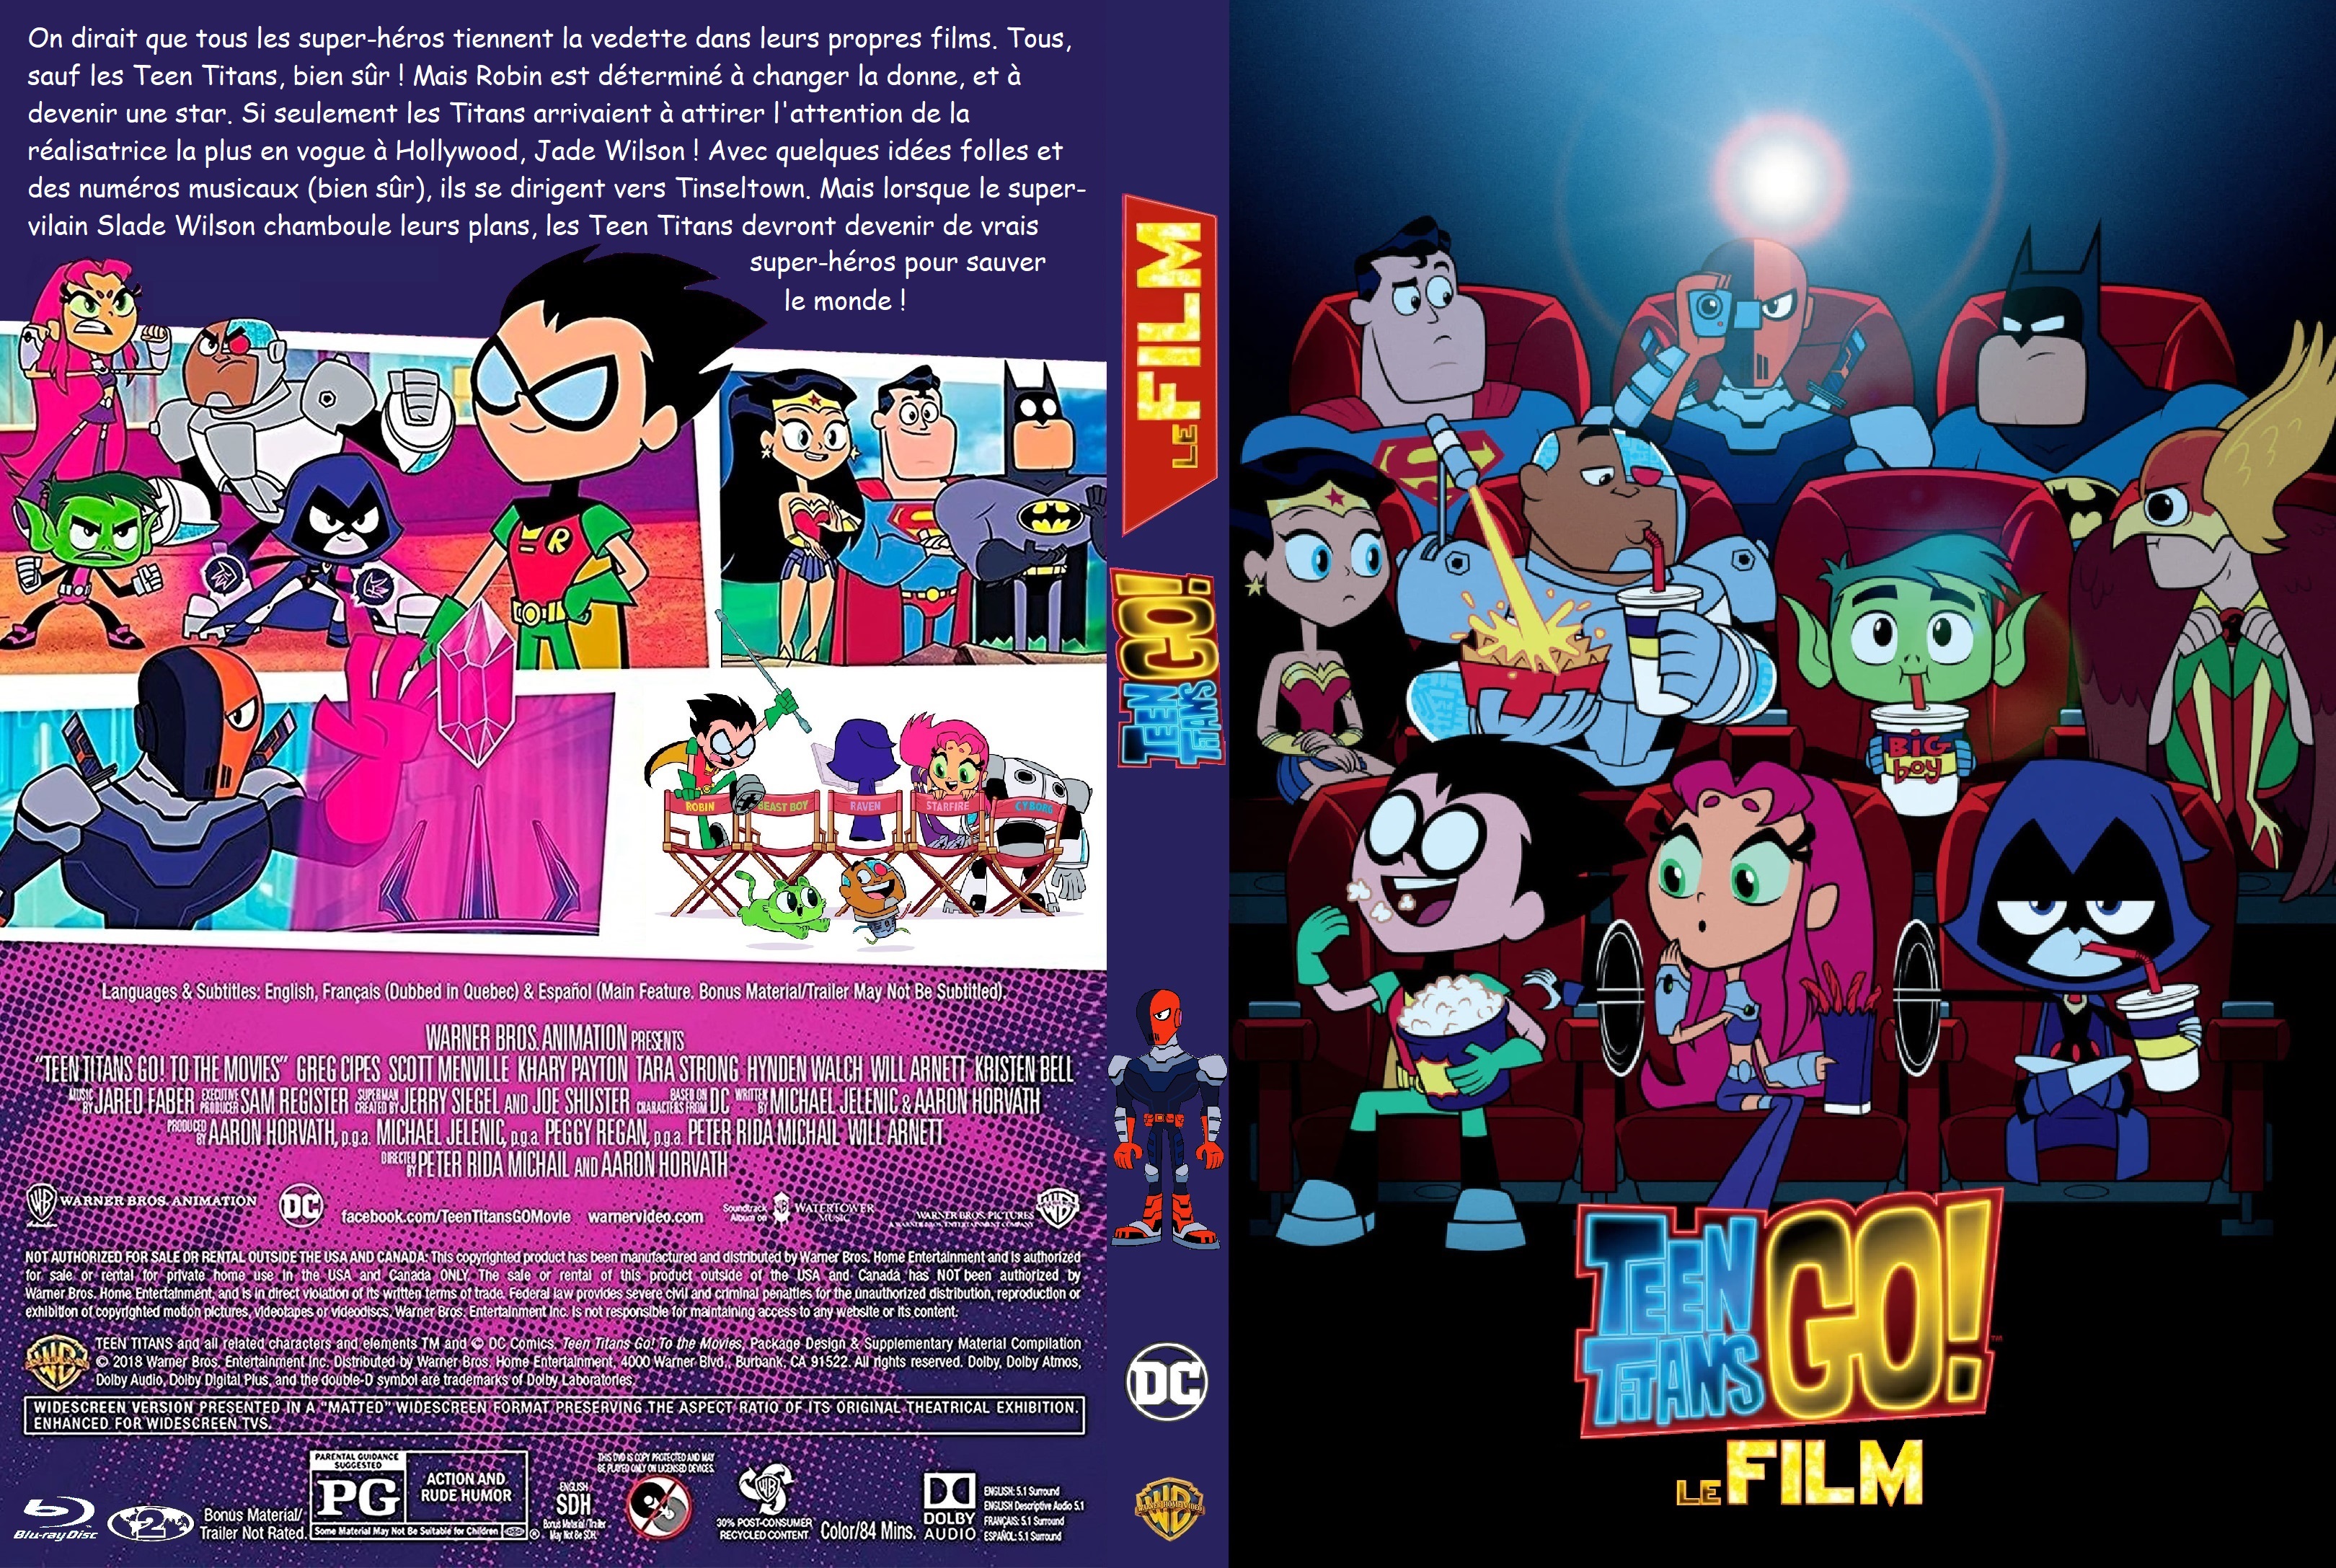 Jaquette DVD Teen Titans Go! Le Film custom